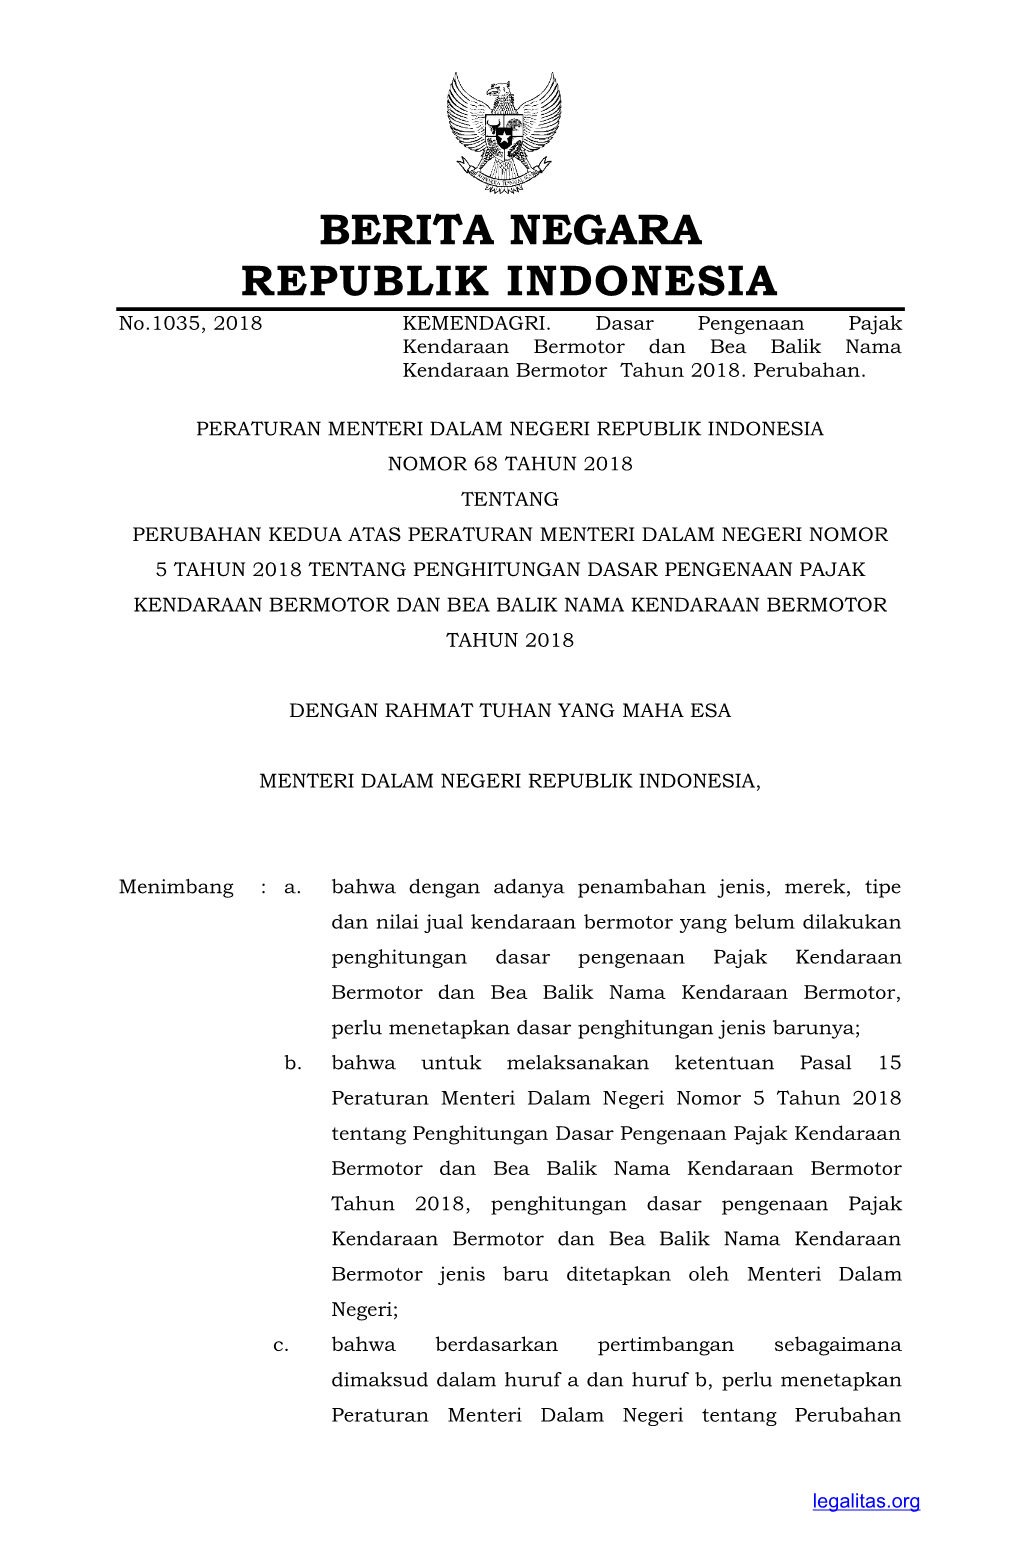 BERITA NEGARA REPUBLIK INDONESIA No.1035, 2018 KEMENDAGRI